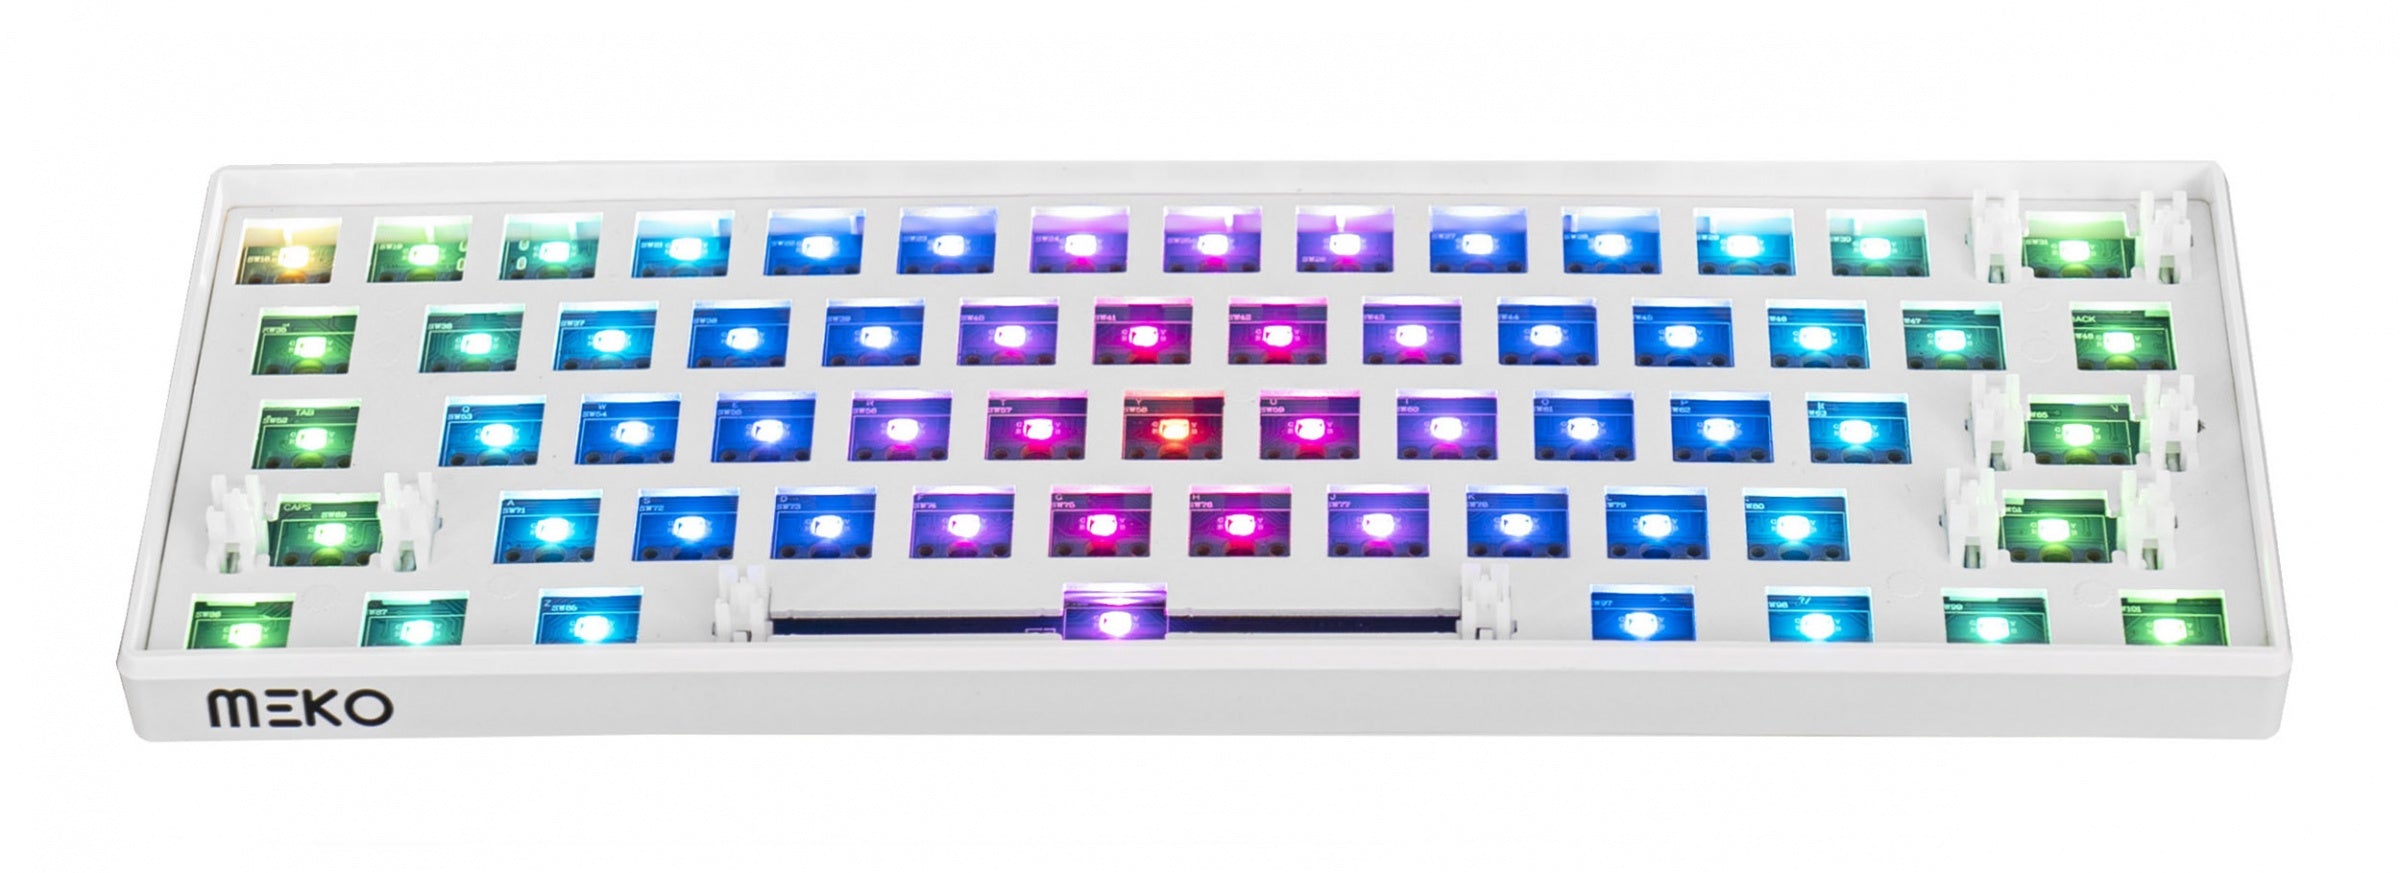 Meko Blink White Barebones 60% Mechanical Keyboard